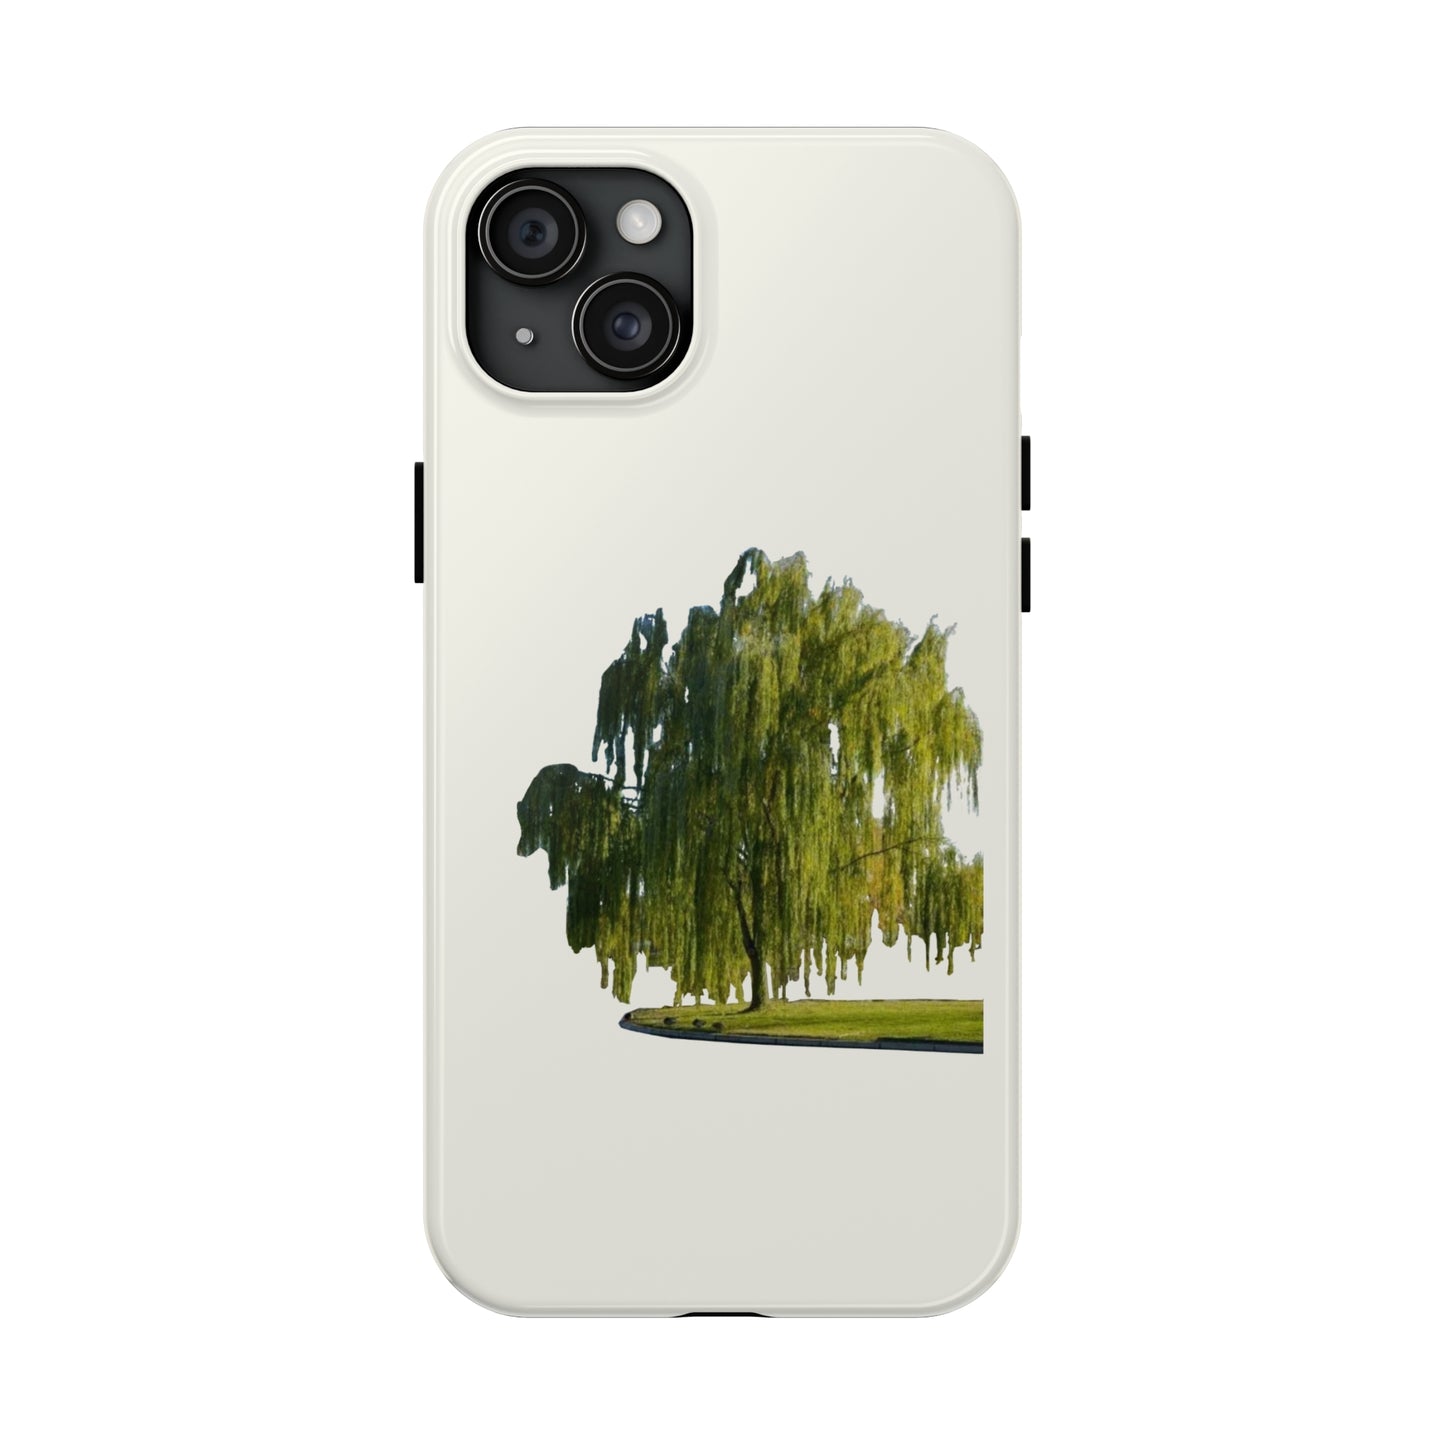 Willow tree iPhone case